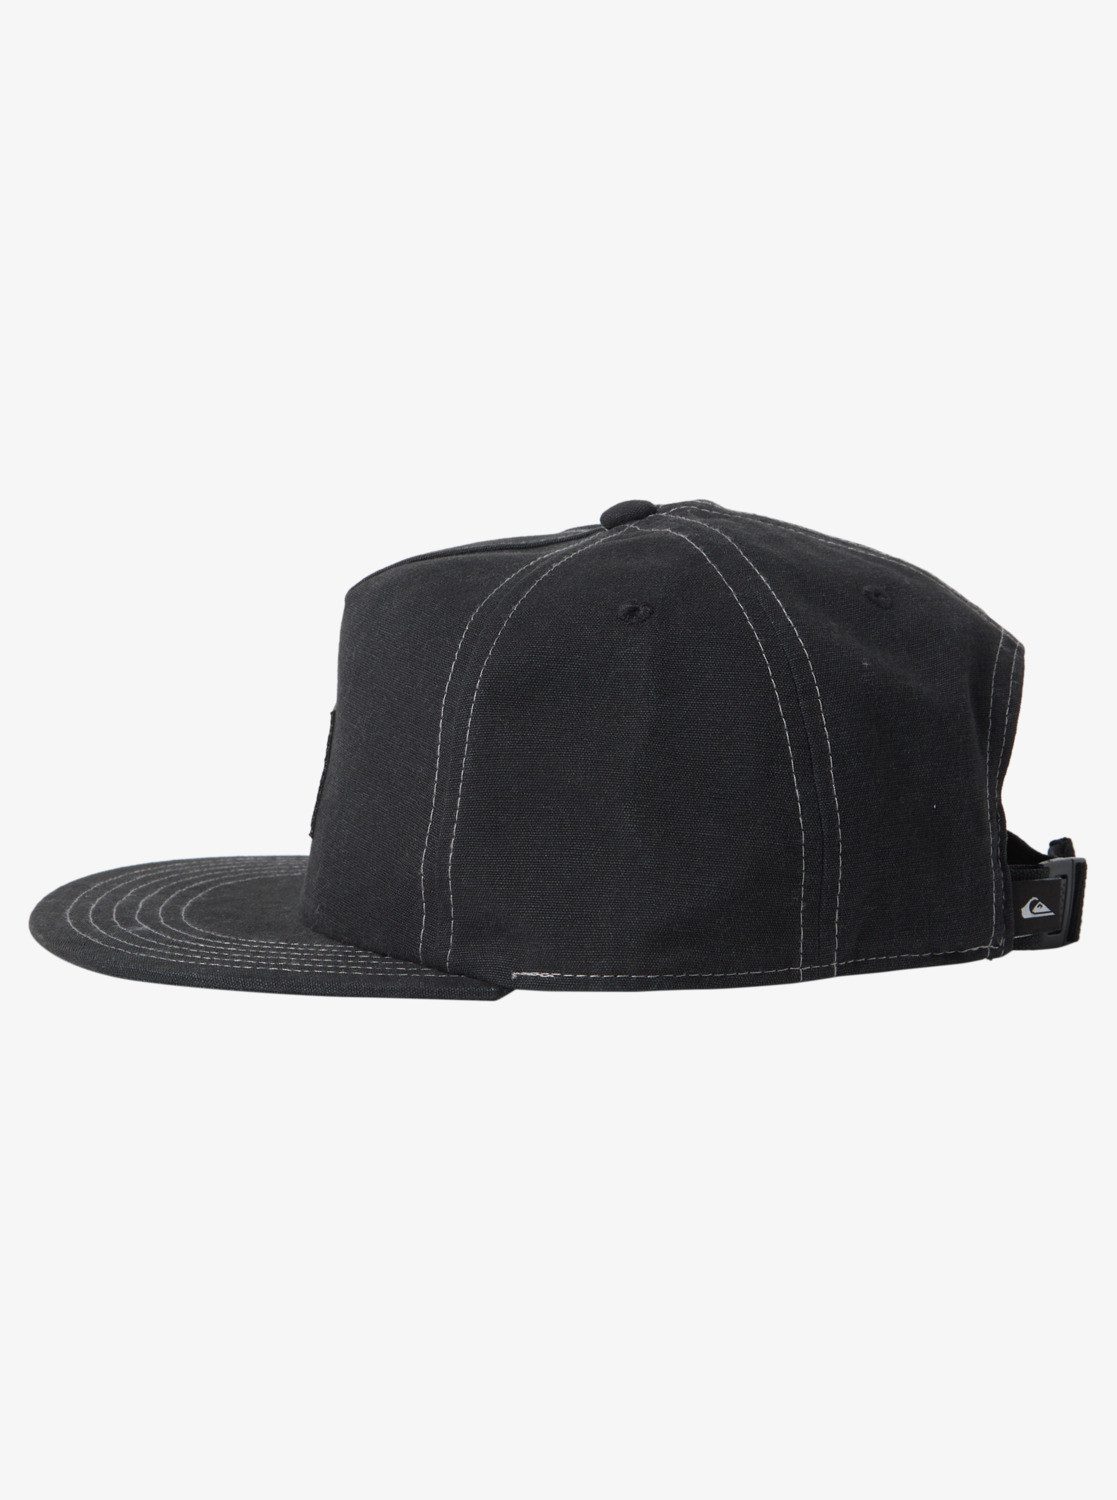 Quiksilver Snapback cap Original